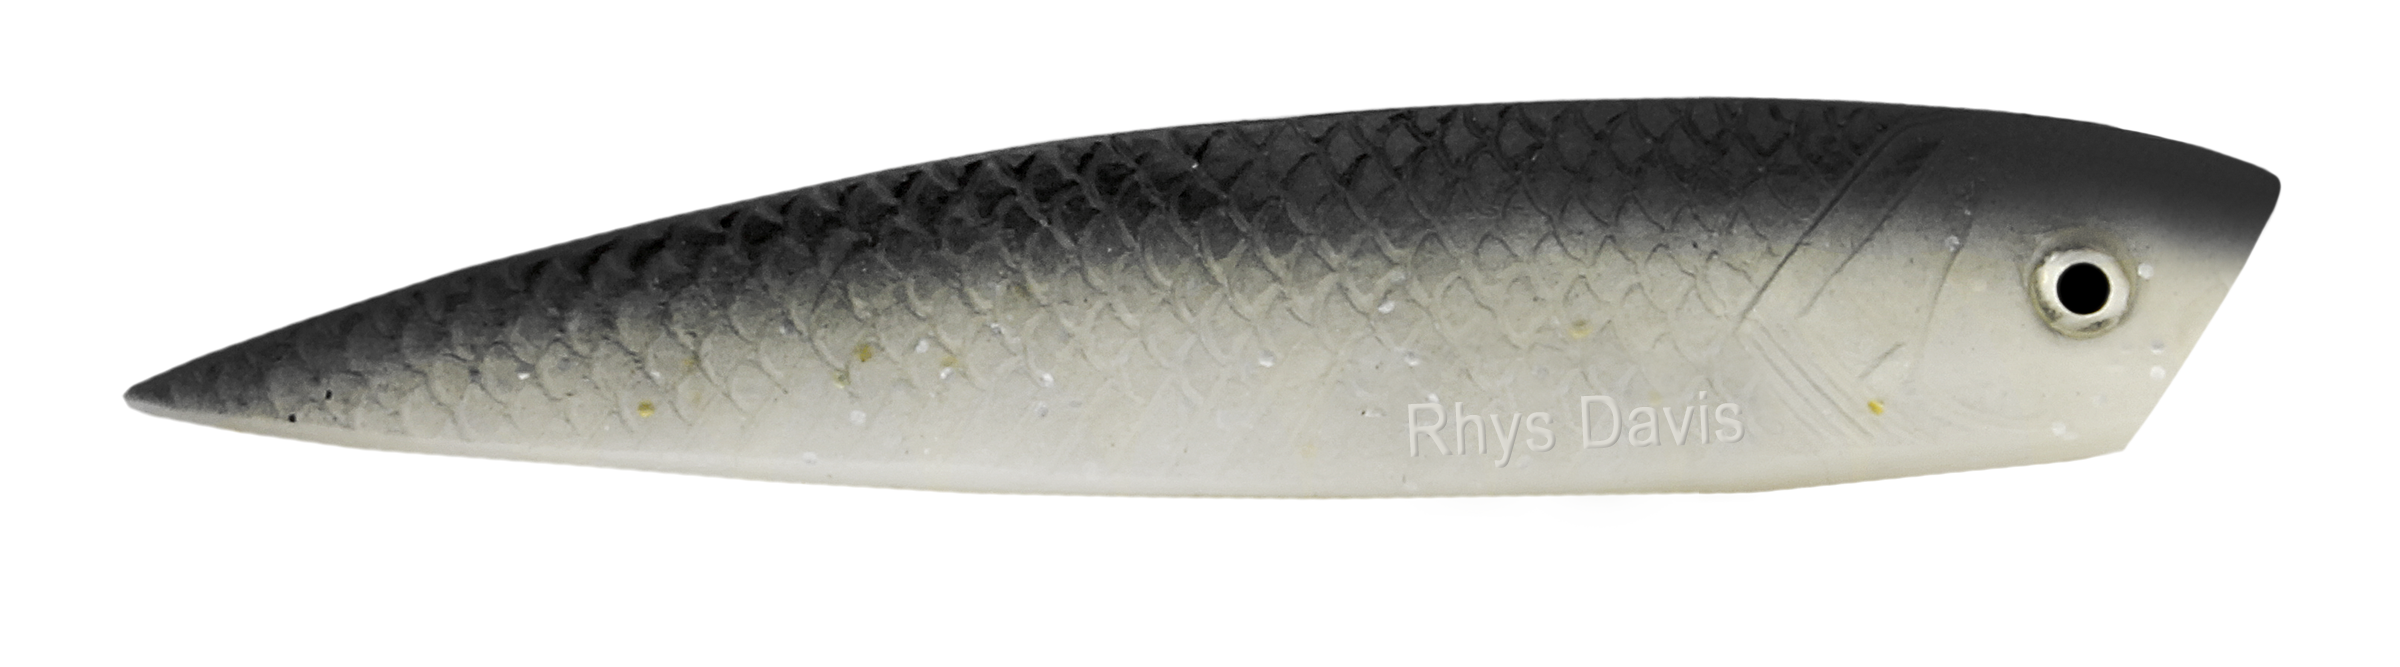 Rhys Davis Big Bite Herring Strip